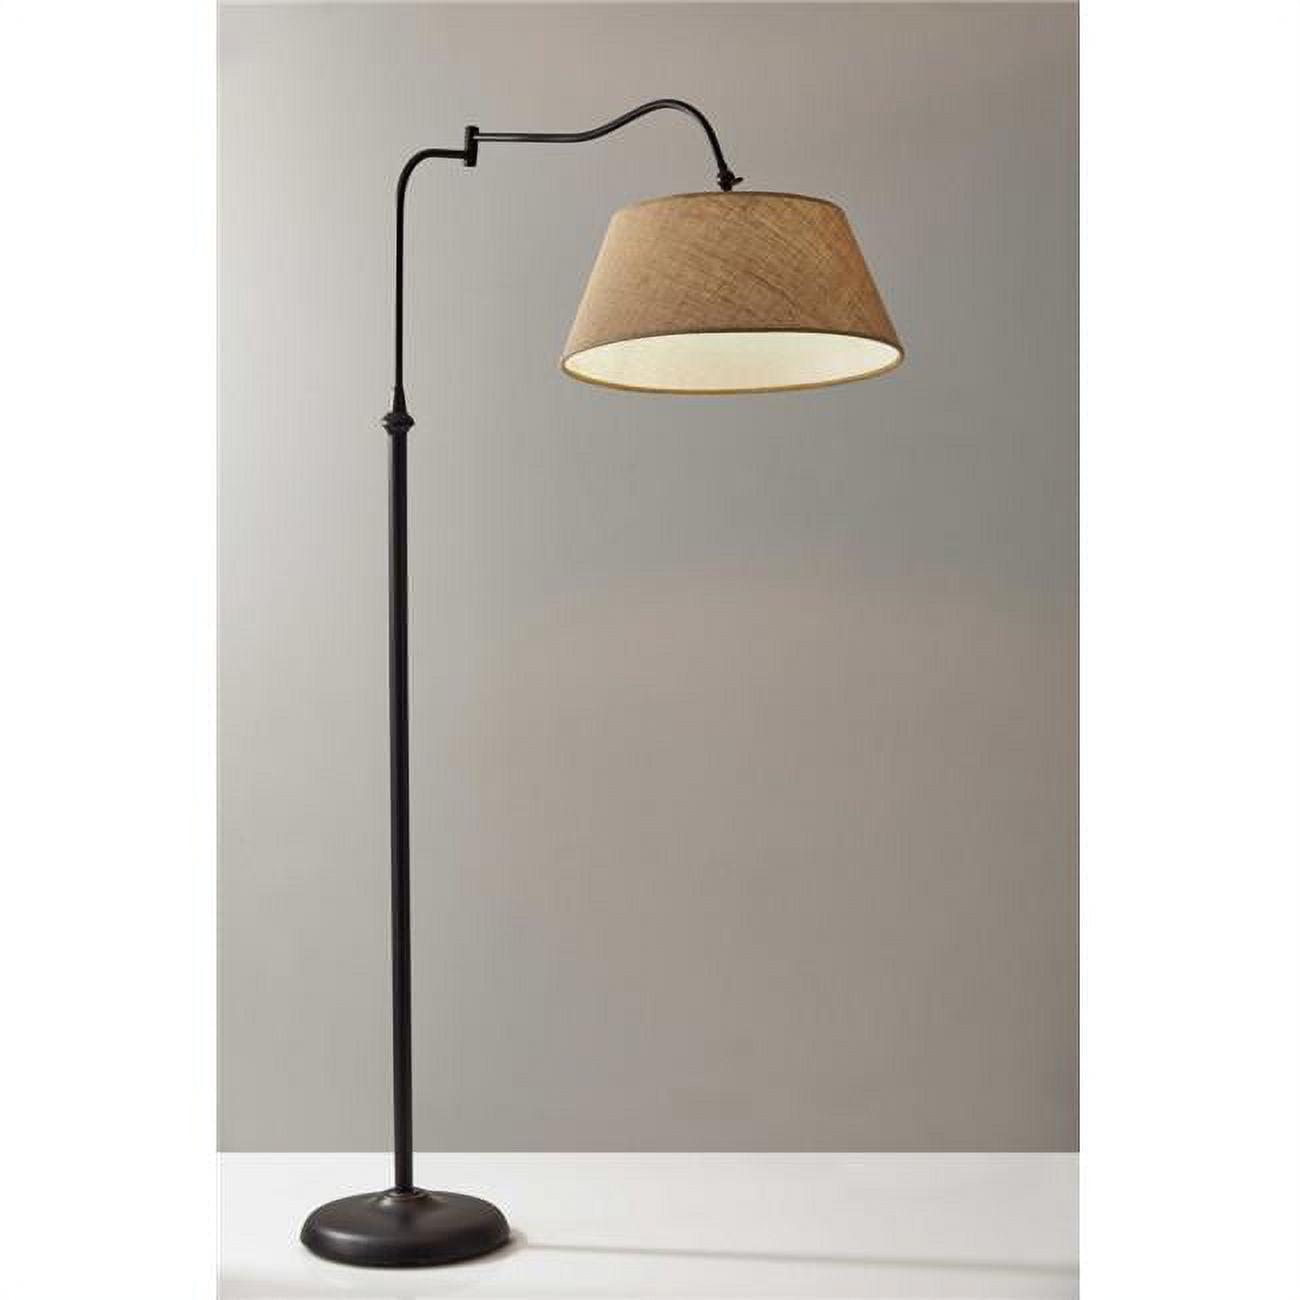 Elegant Dark Bronze Adjustable Arc Floor Lamp with Burlap Shade